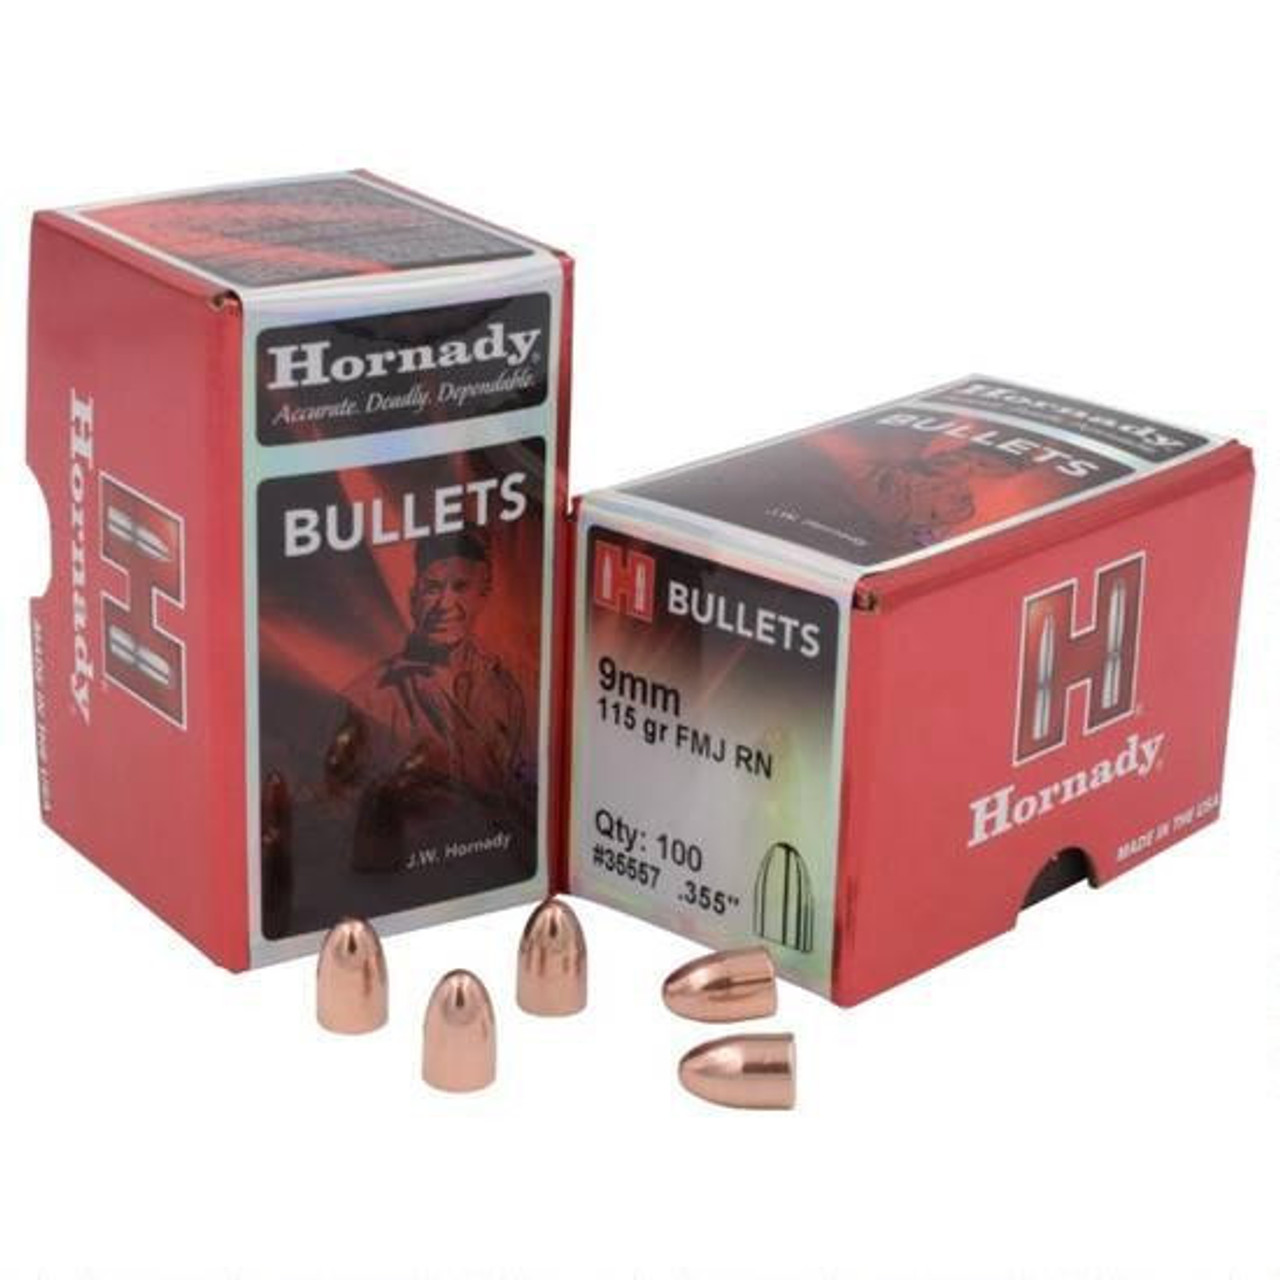 Hornady FMJ Handgun Bullets 9mm .355 Diam, 115 Gr FMJRN 500 Ct